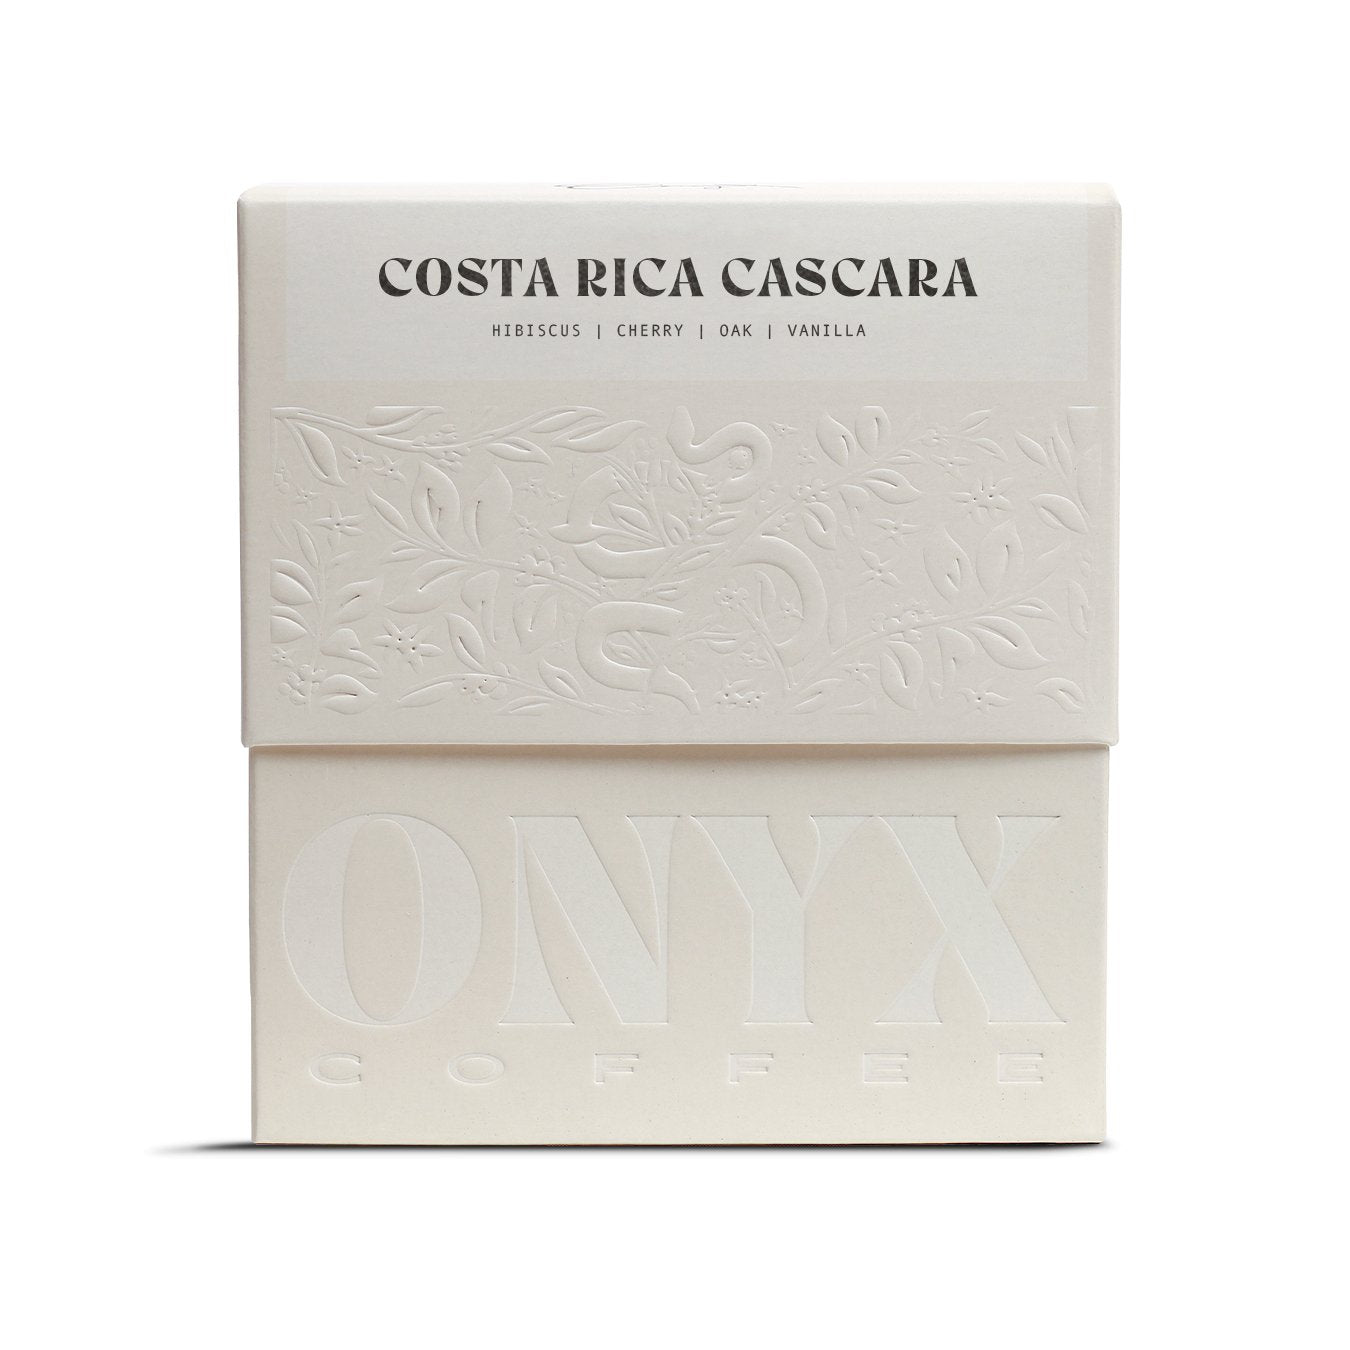 Onyx Costa Rica Cascara Coffee